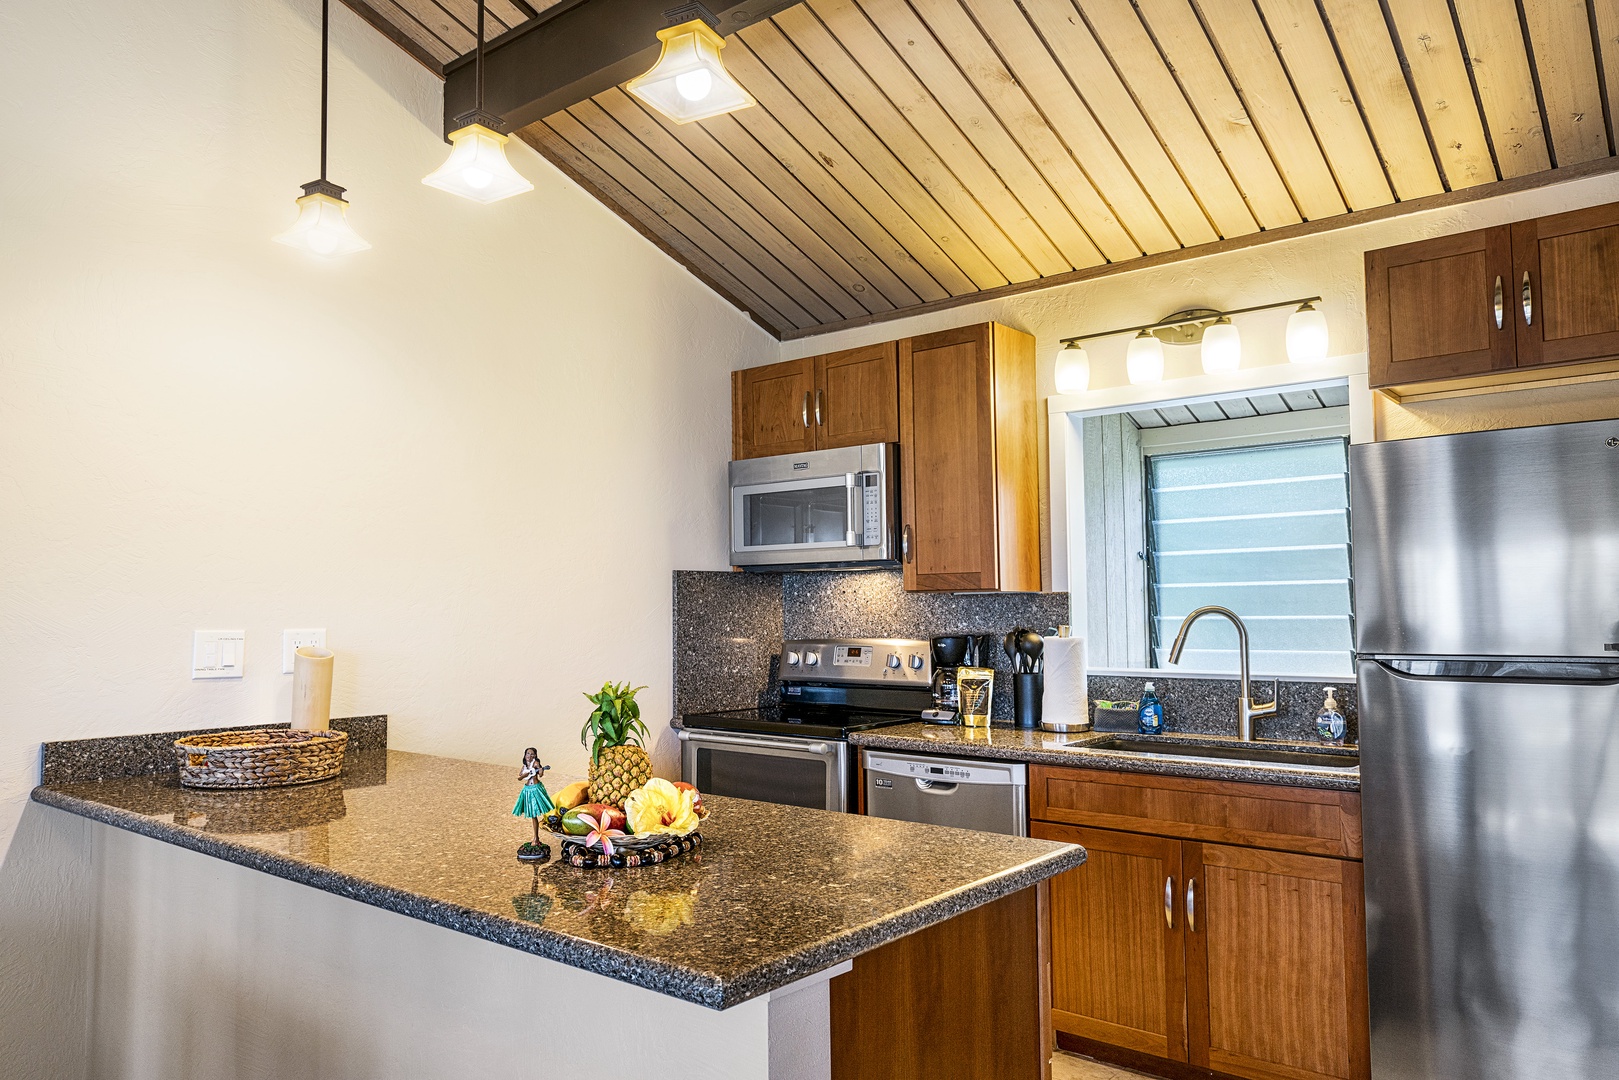 Kailua Kona Vacation Rentals, Keauhou Resort 113 - Open floor plan kitchen with high end touches!